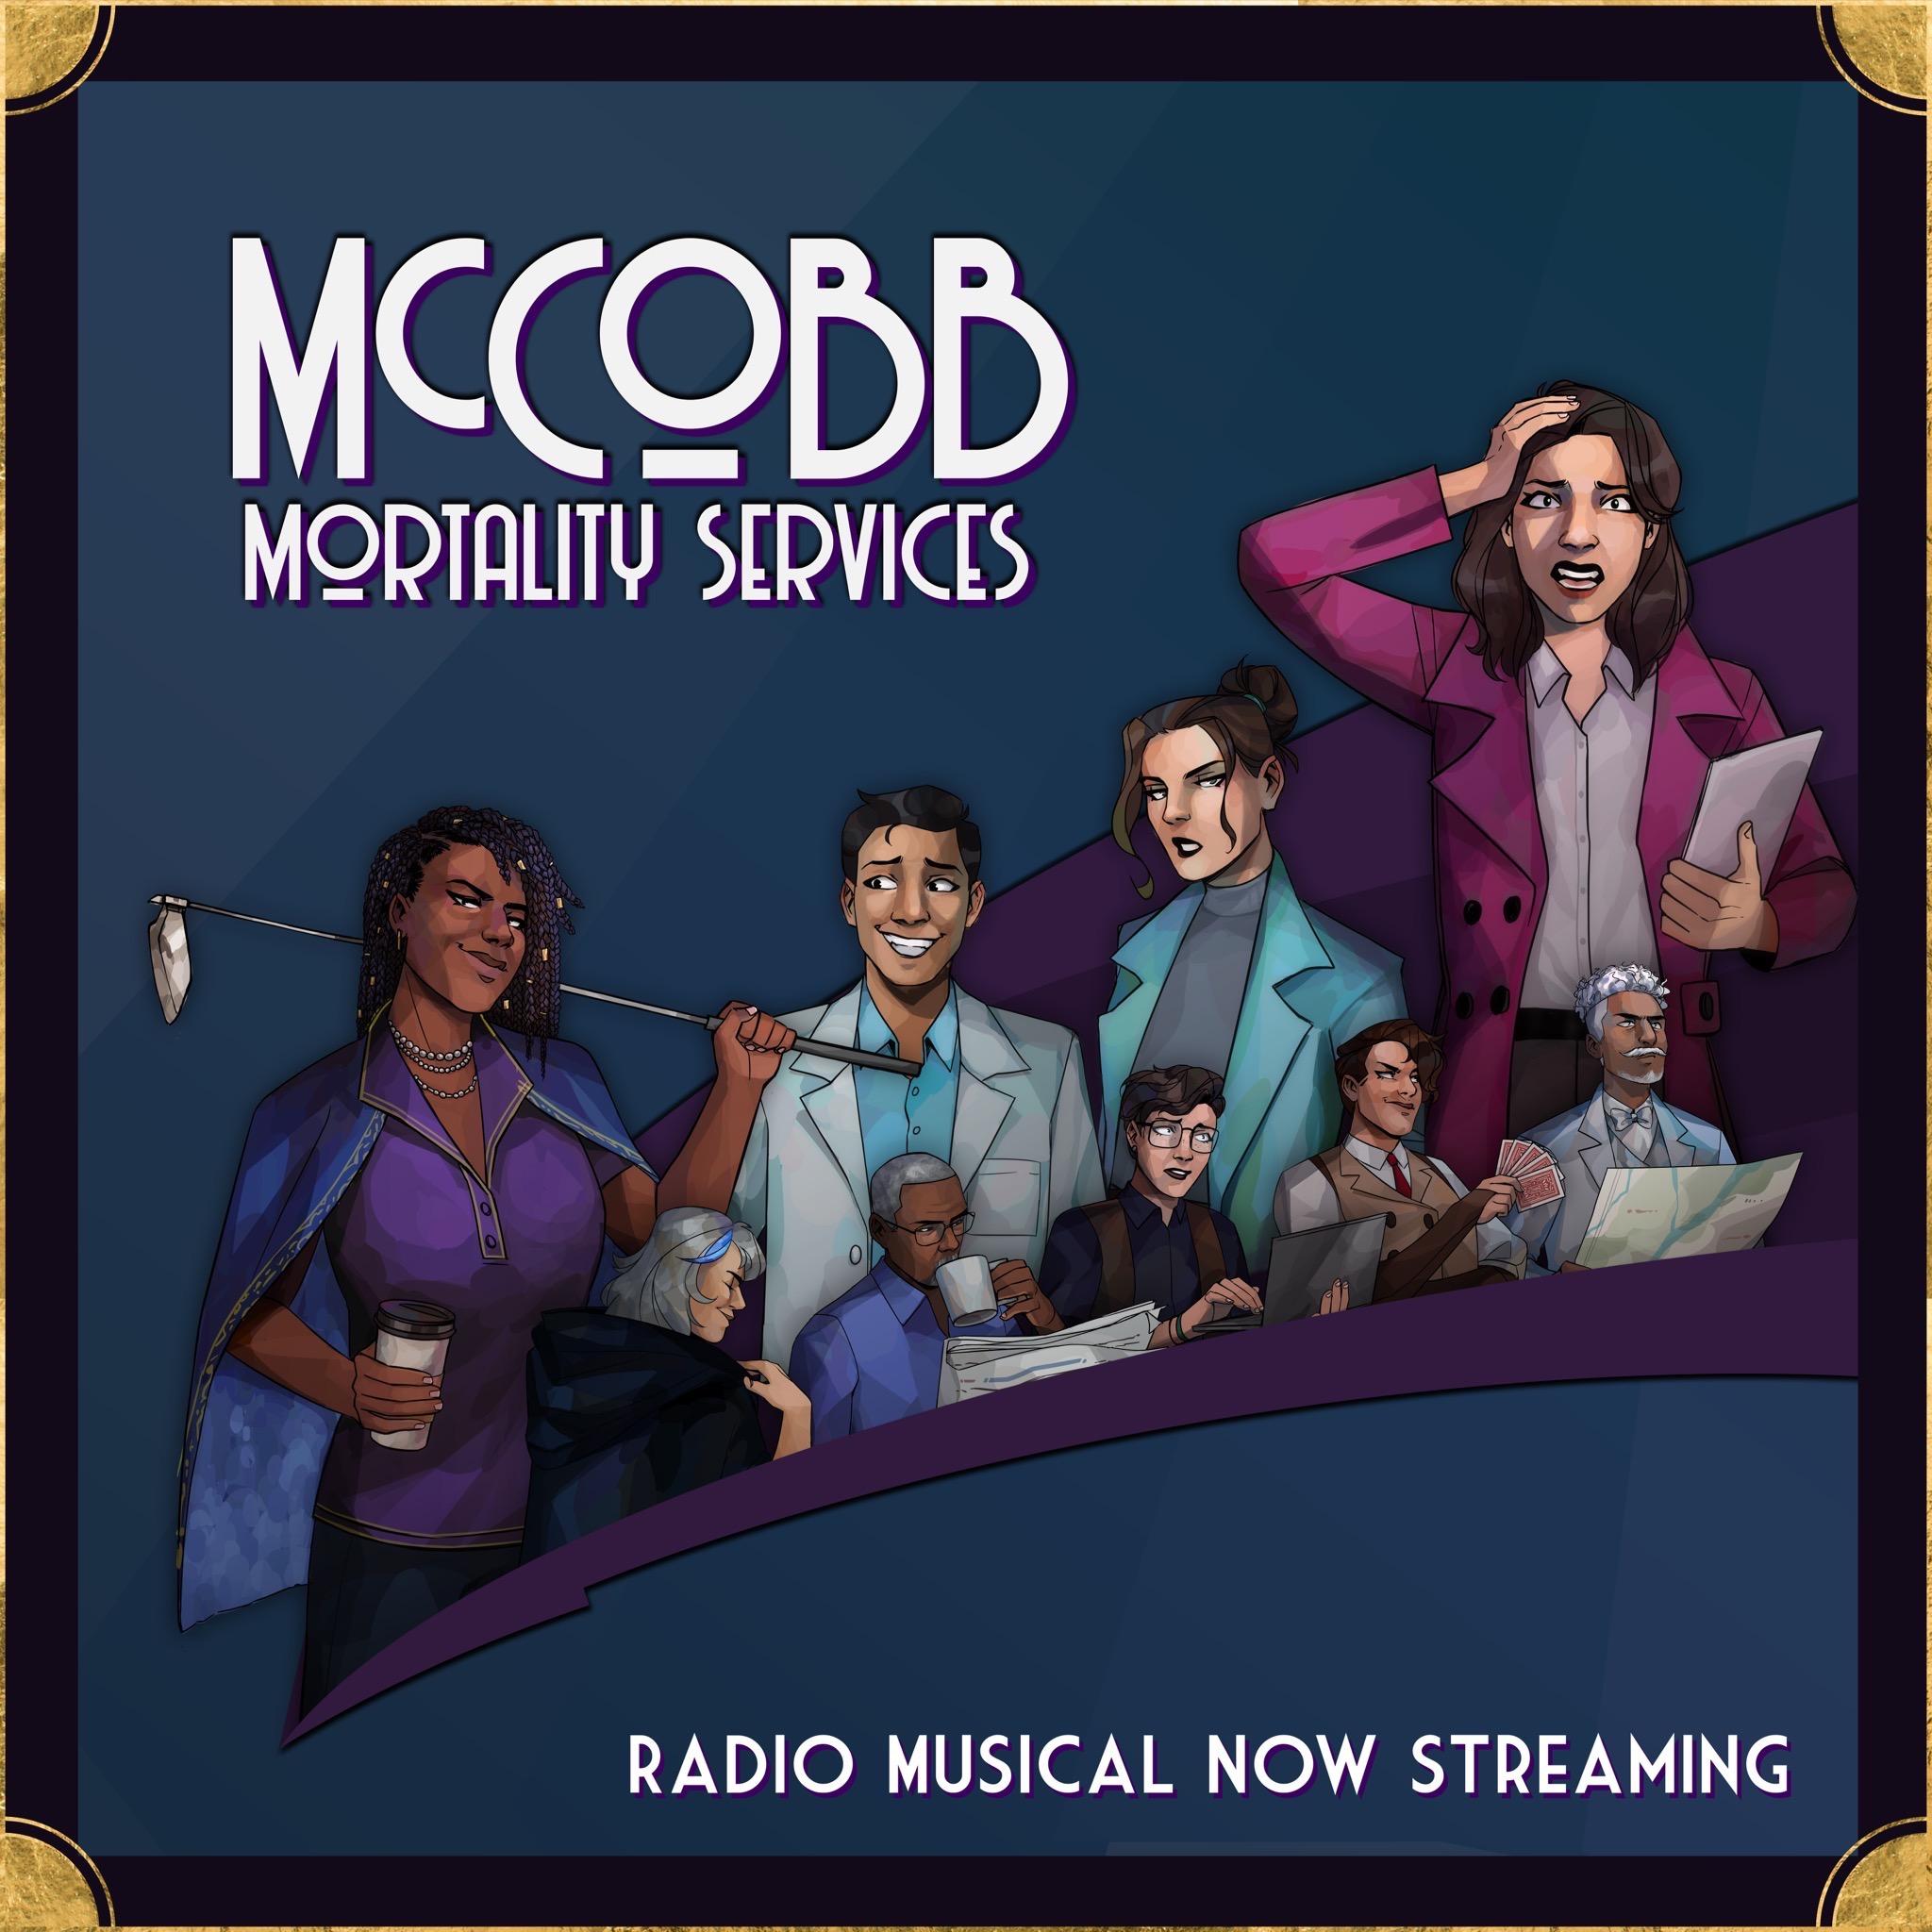 McCobb Mortality Services